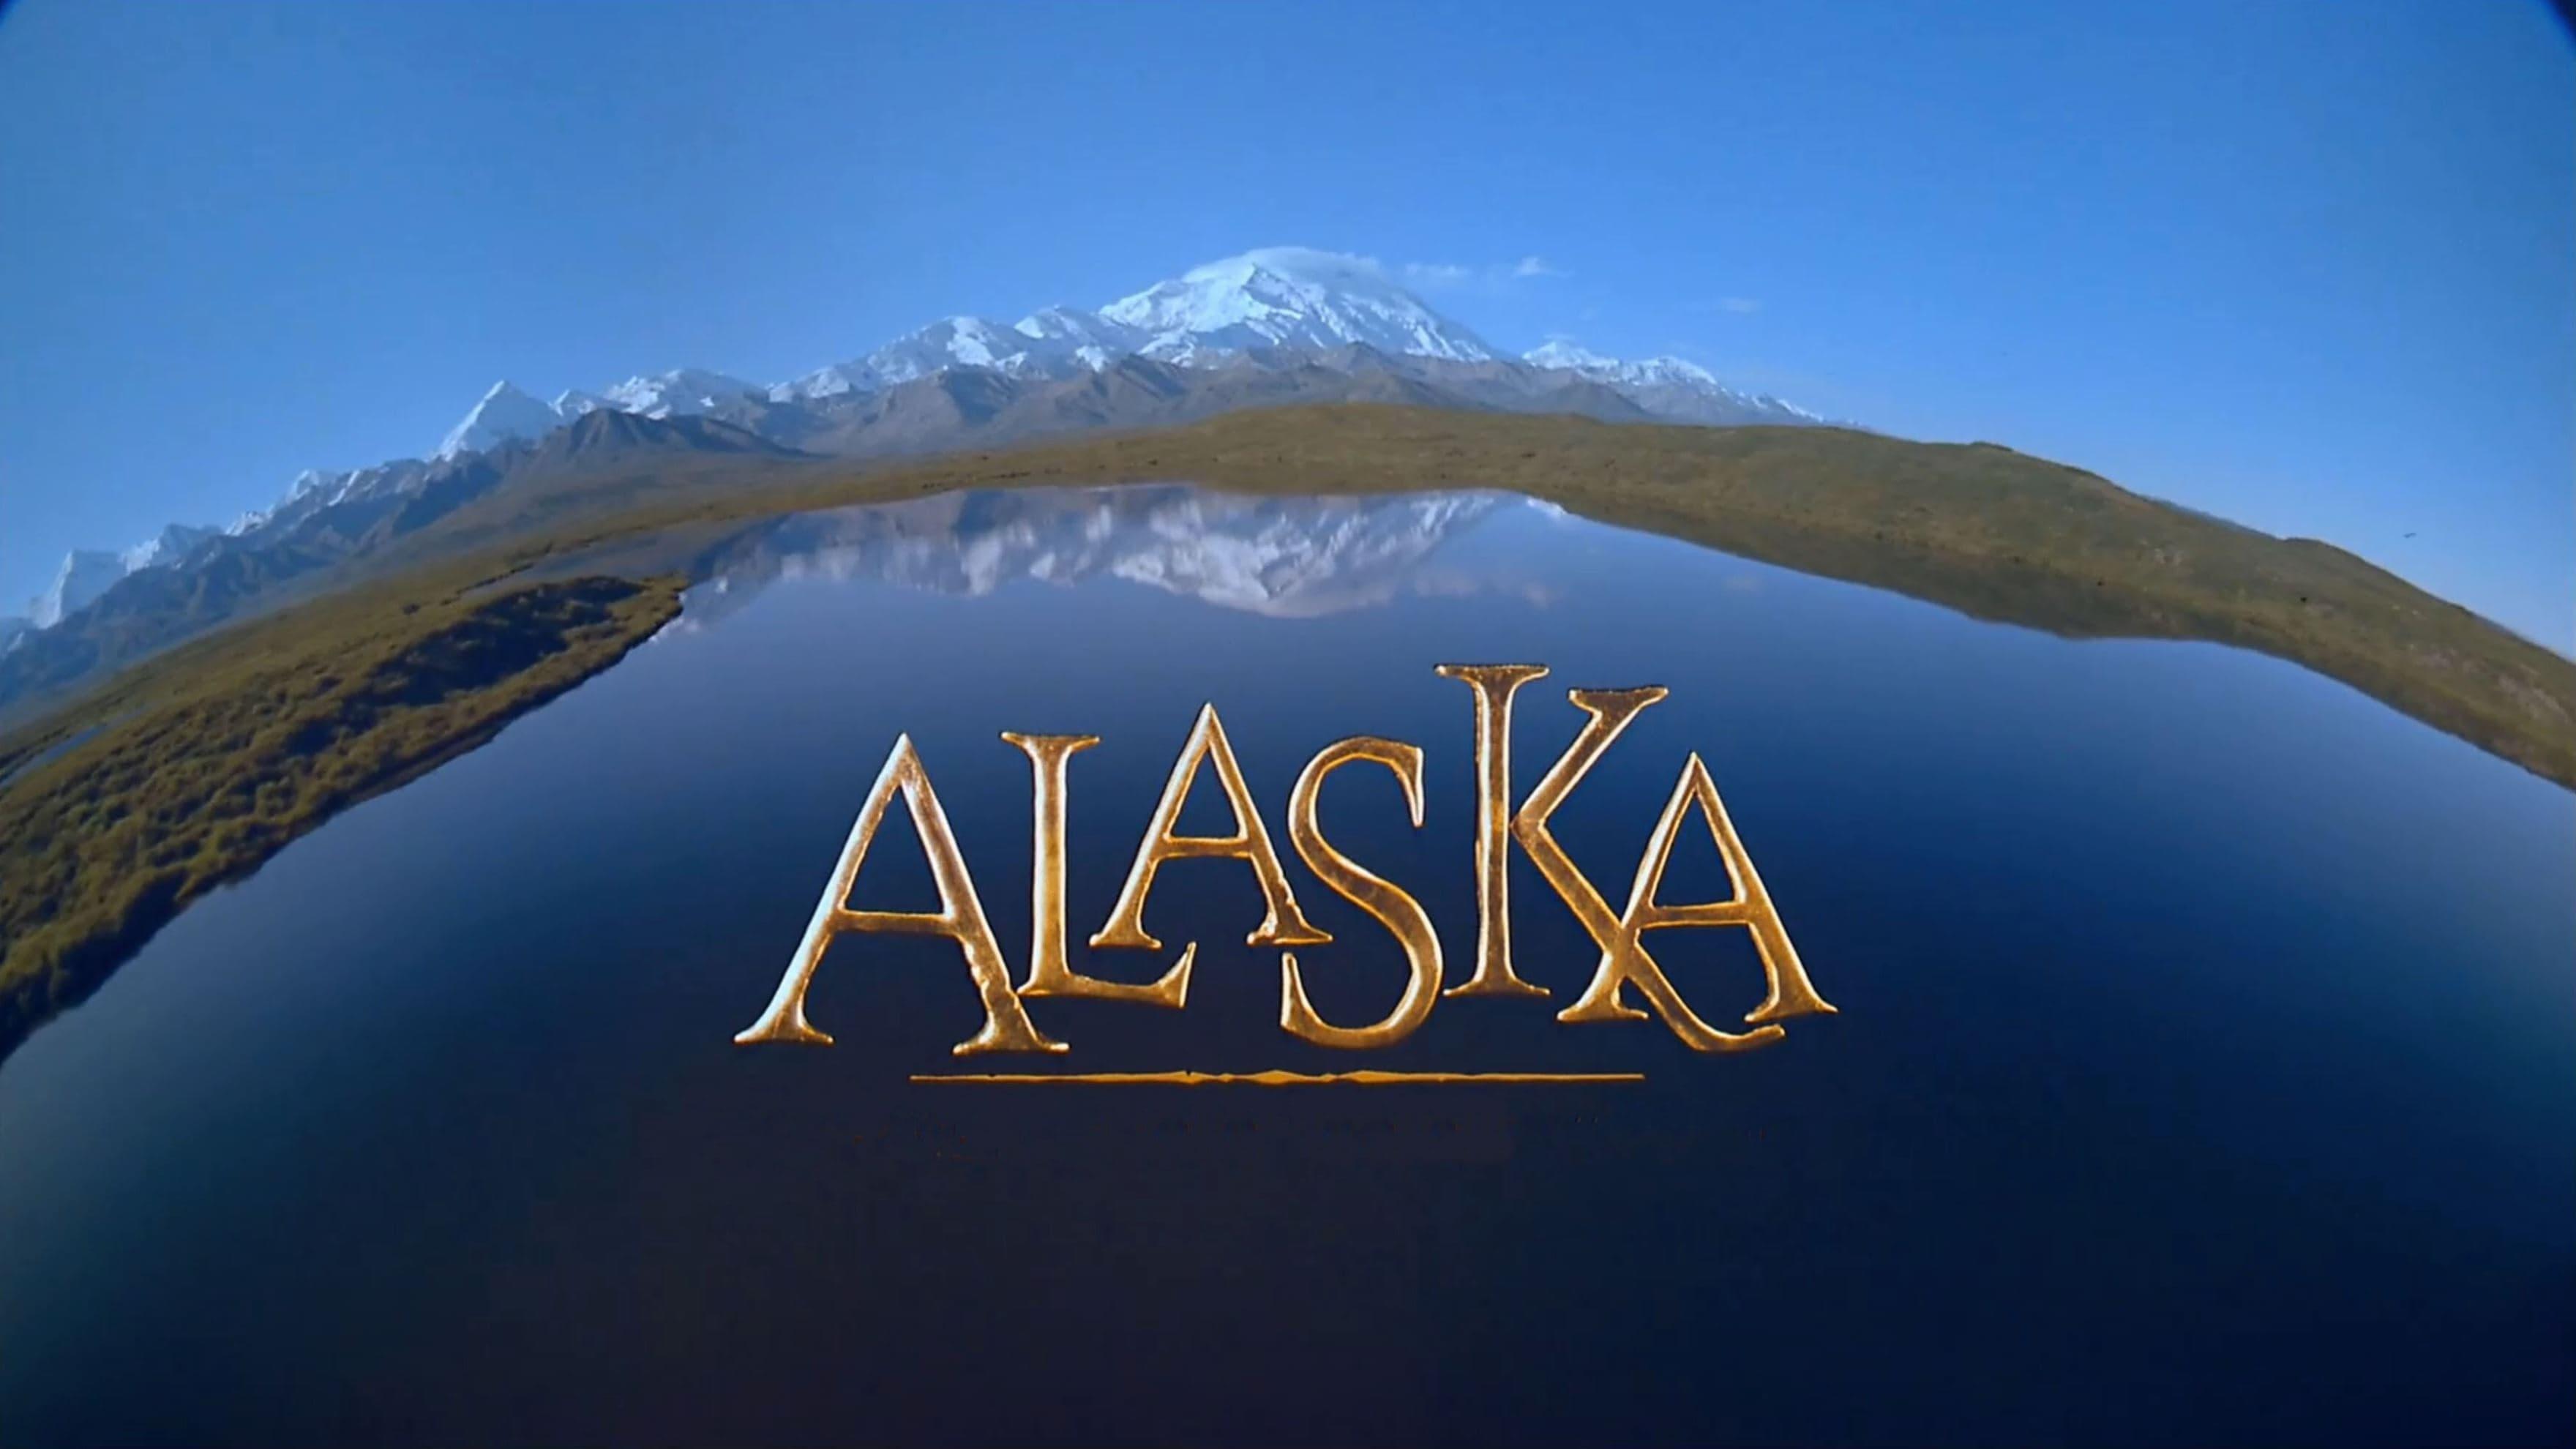 Alaska: Spirit of the Wild backdrop